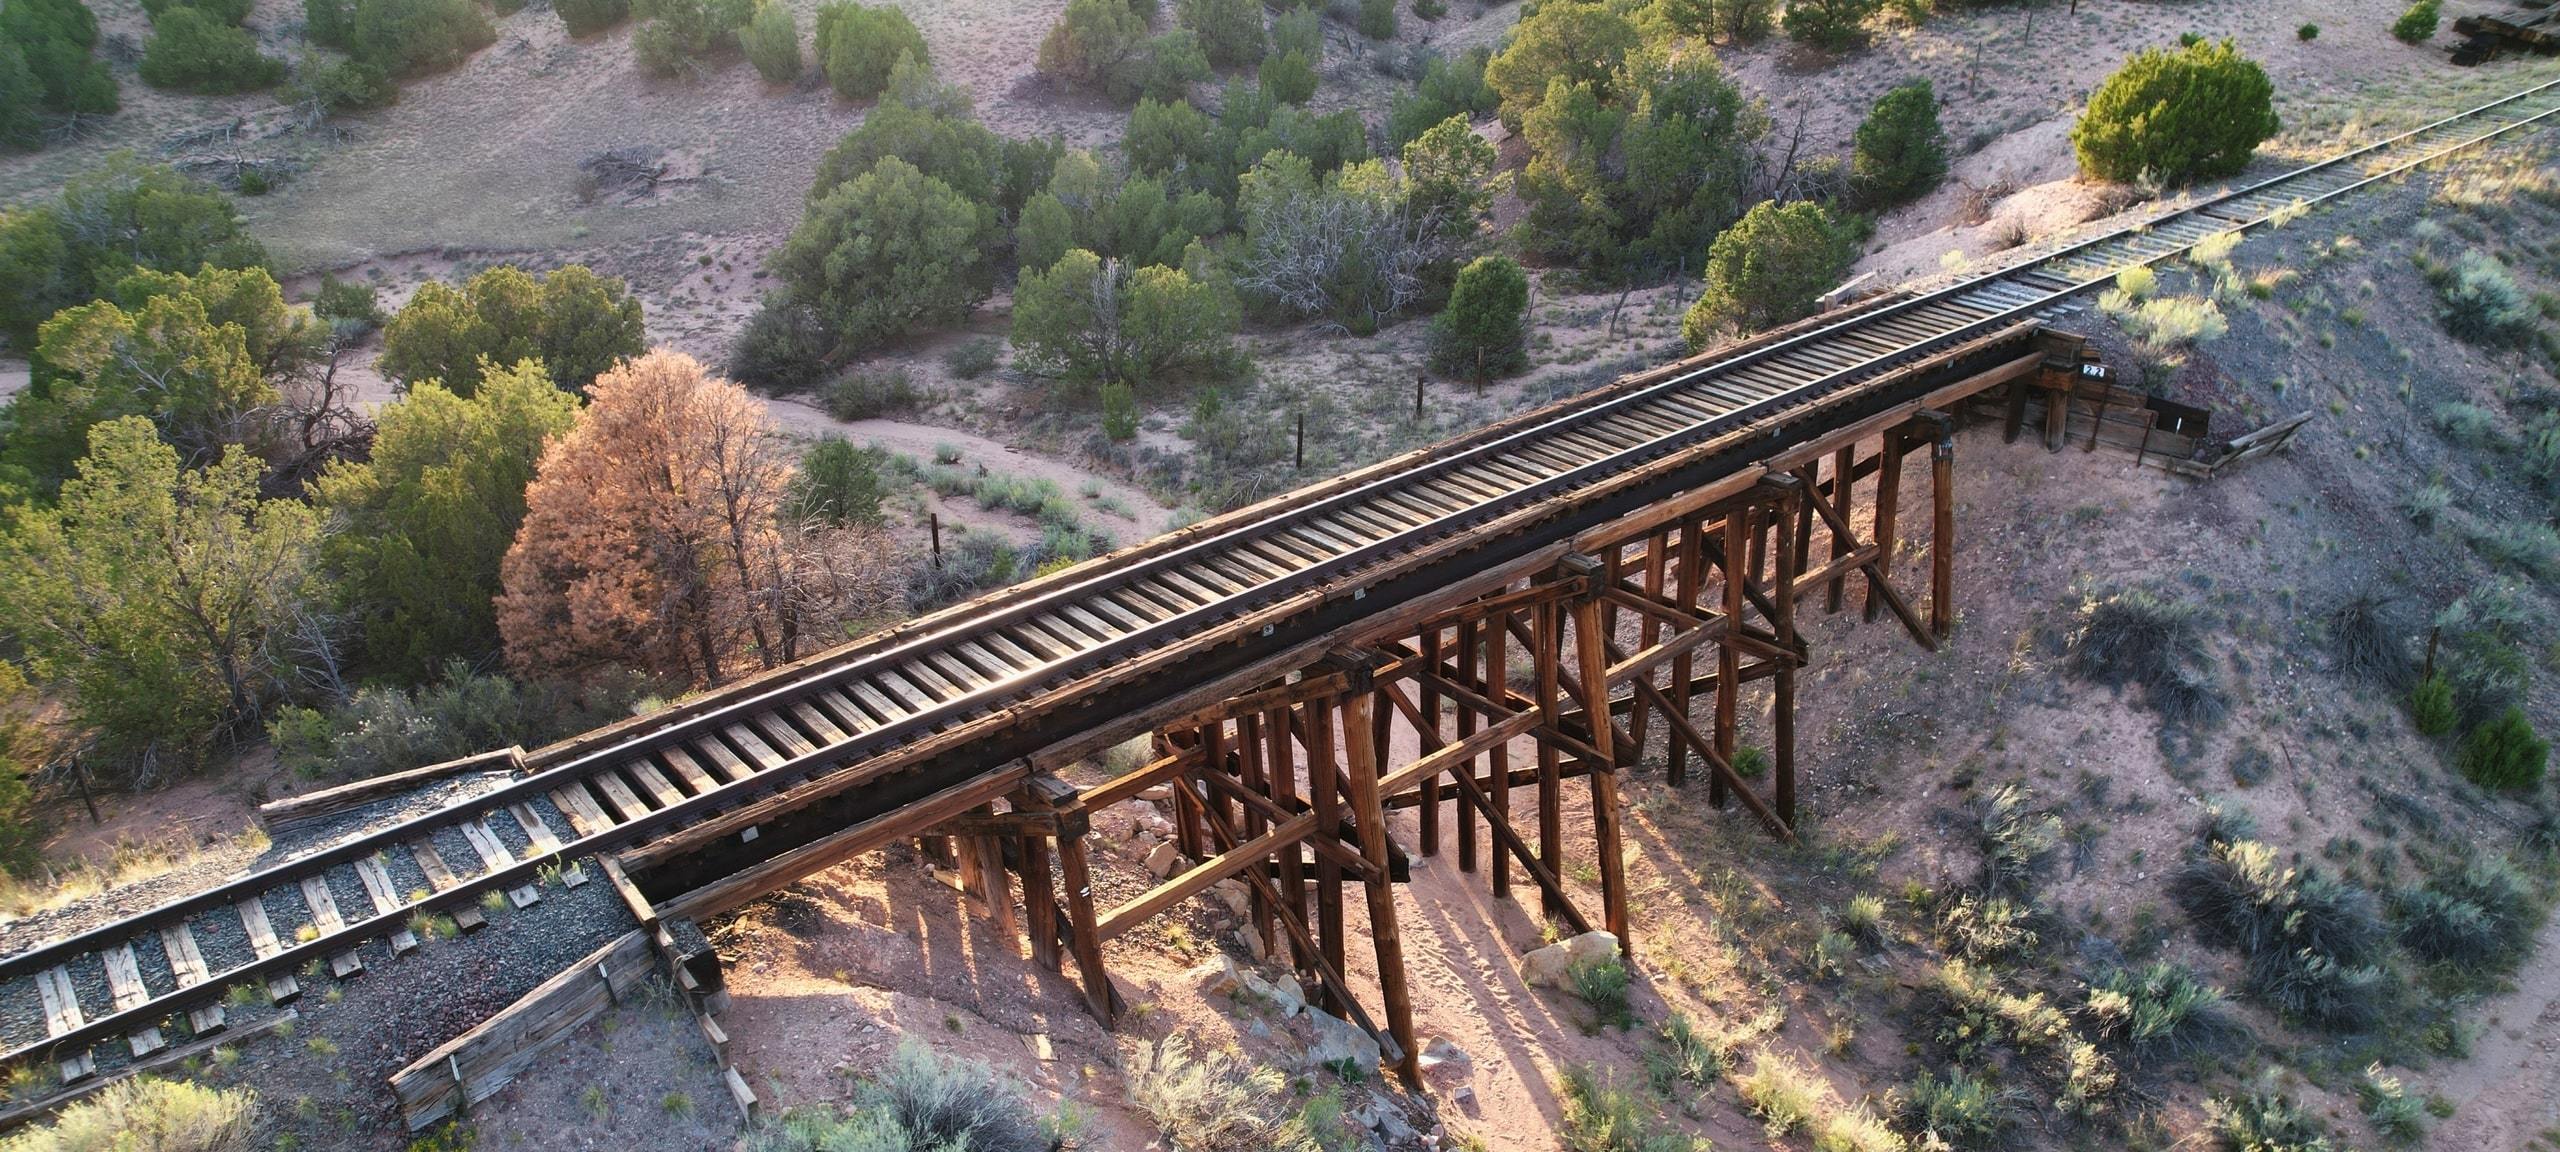 Aerial view of Santa Fe, NM landscape and railroad tracks